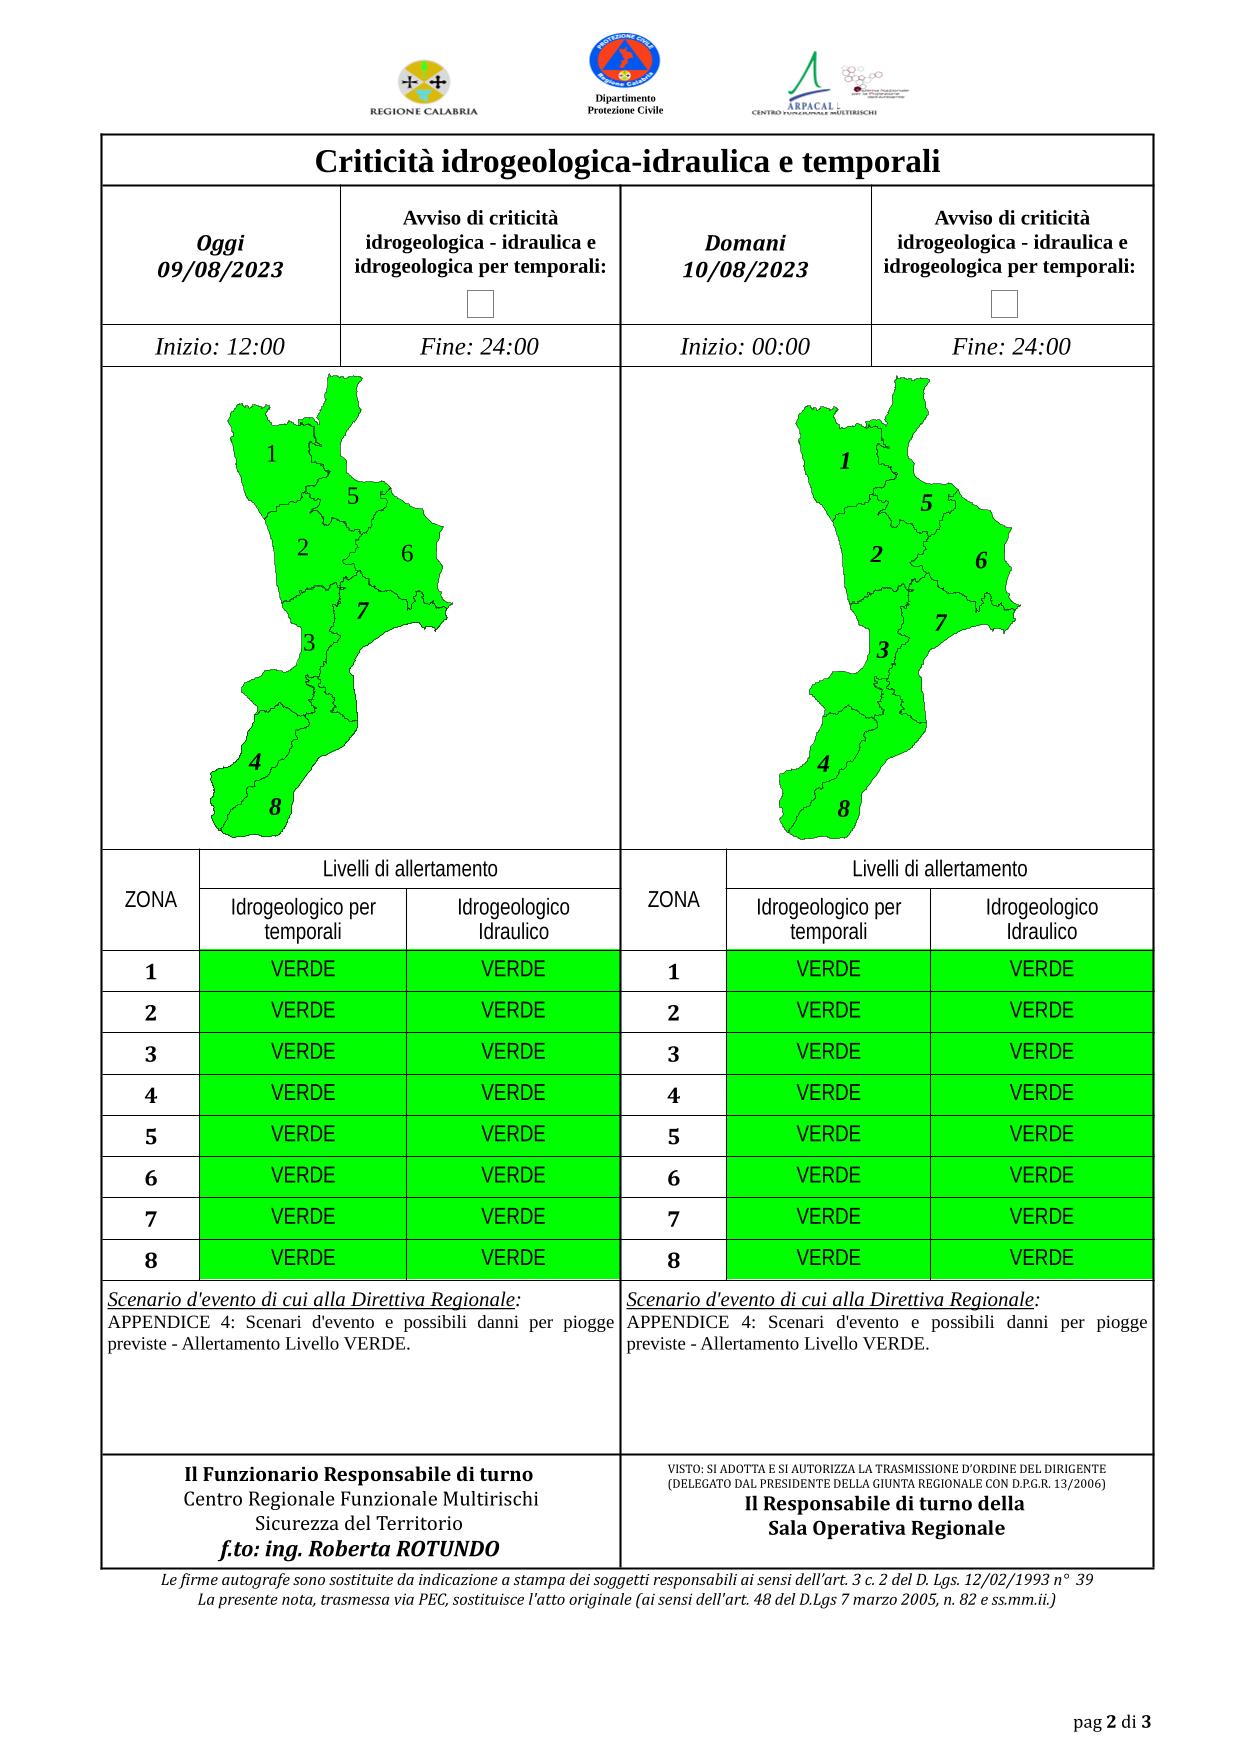 Criticità idrogeologica-idraulica e temporali in Calabria 09-08-2023